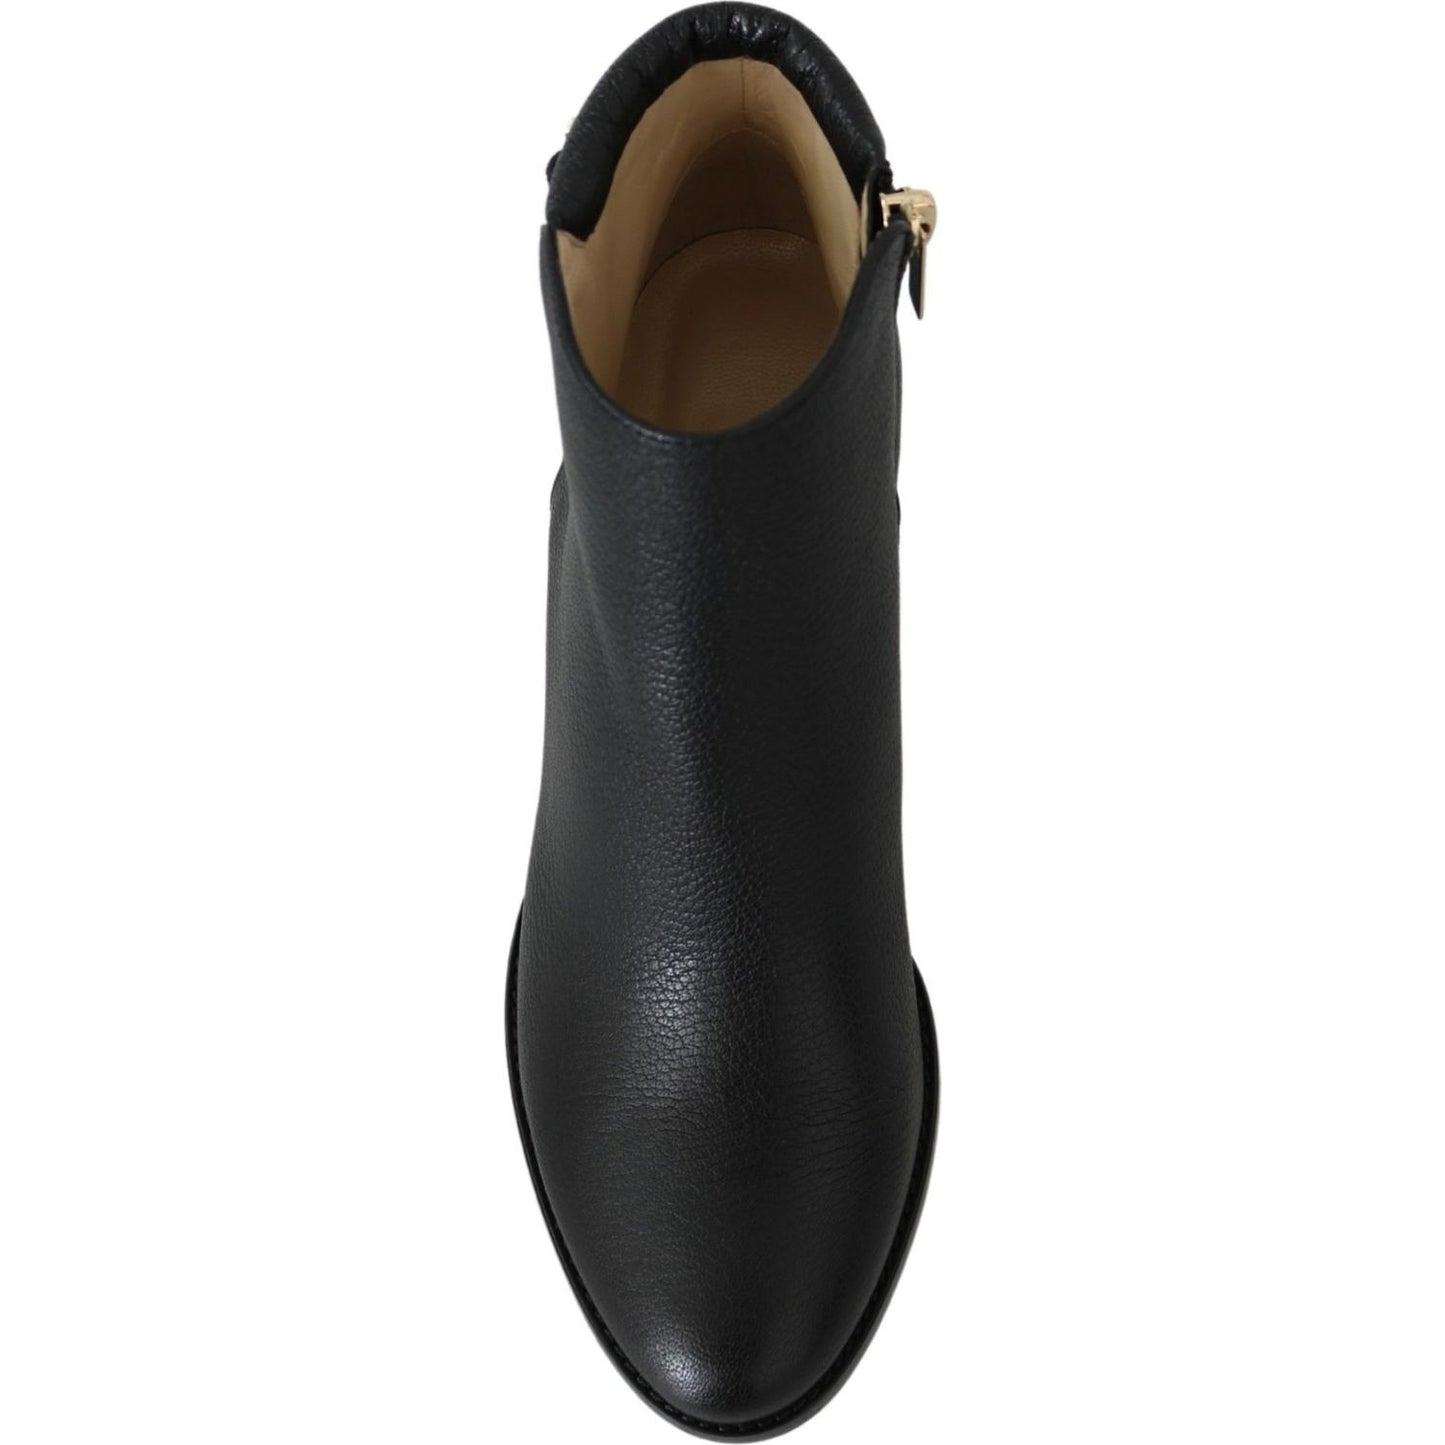 Jimmy Choo Elegant Black Leather Heeled Boots black-leather-method-65-boots